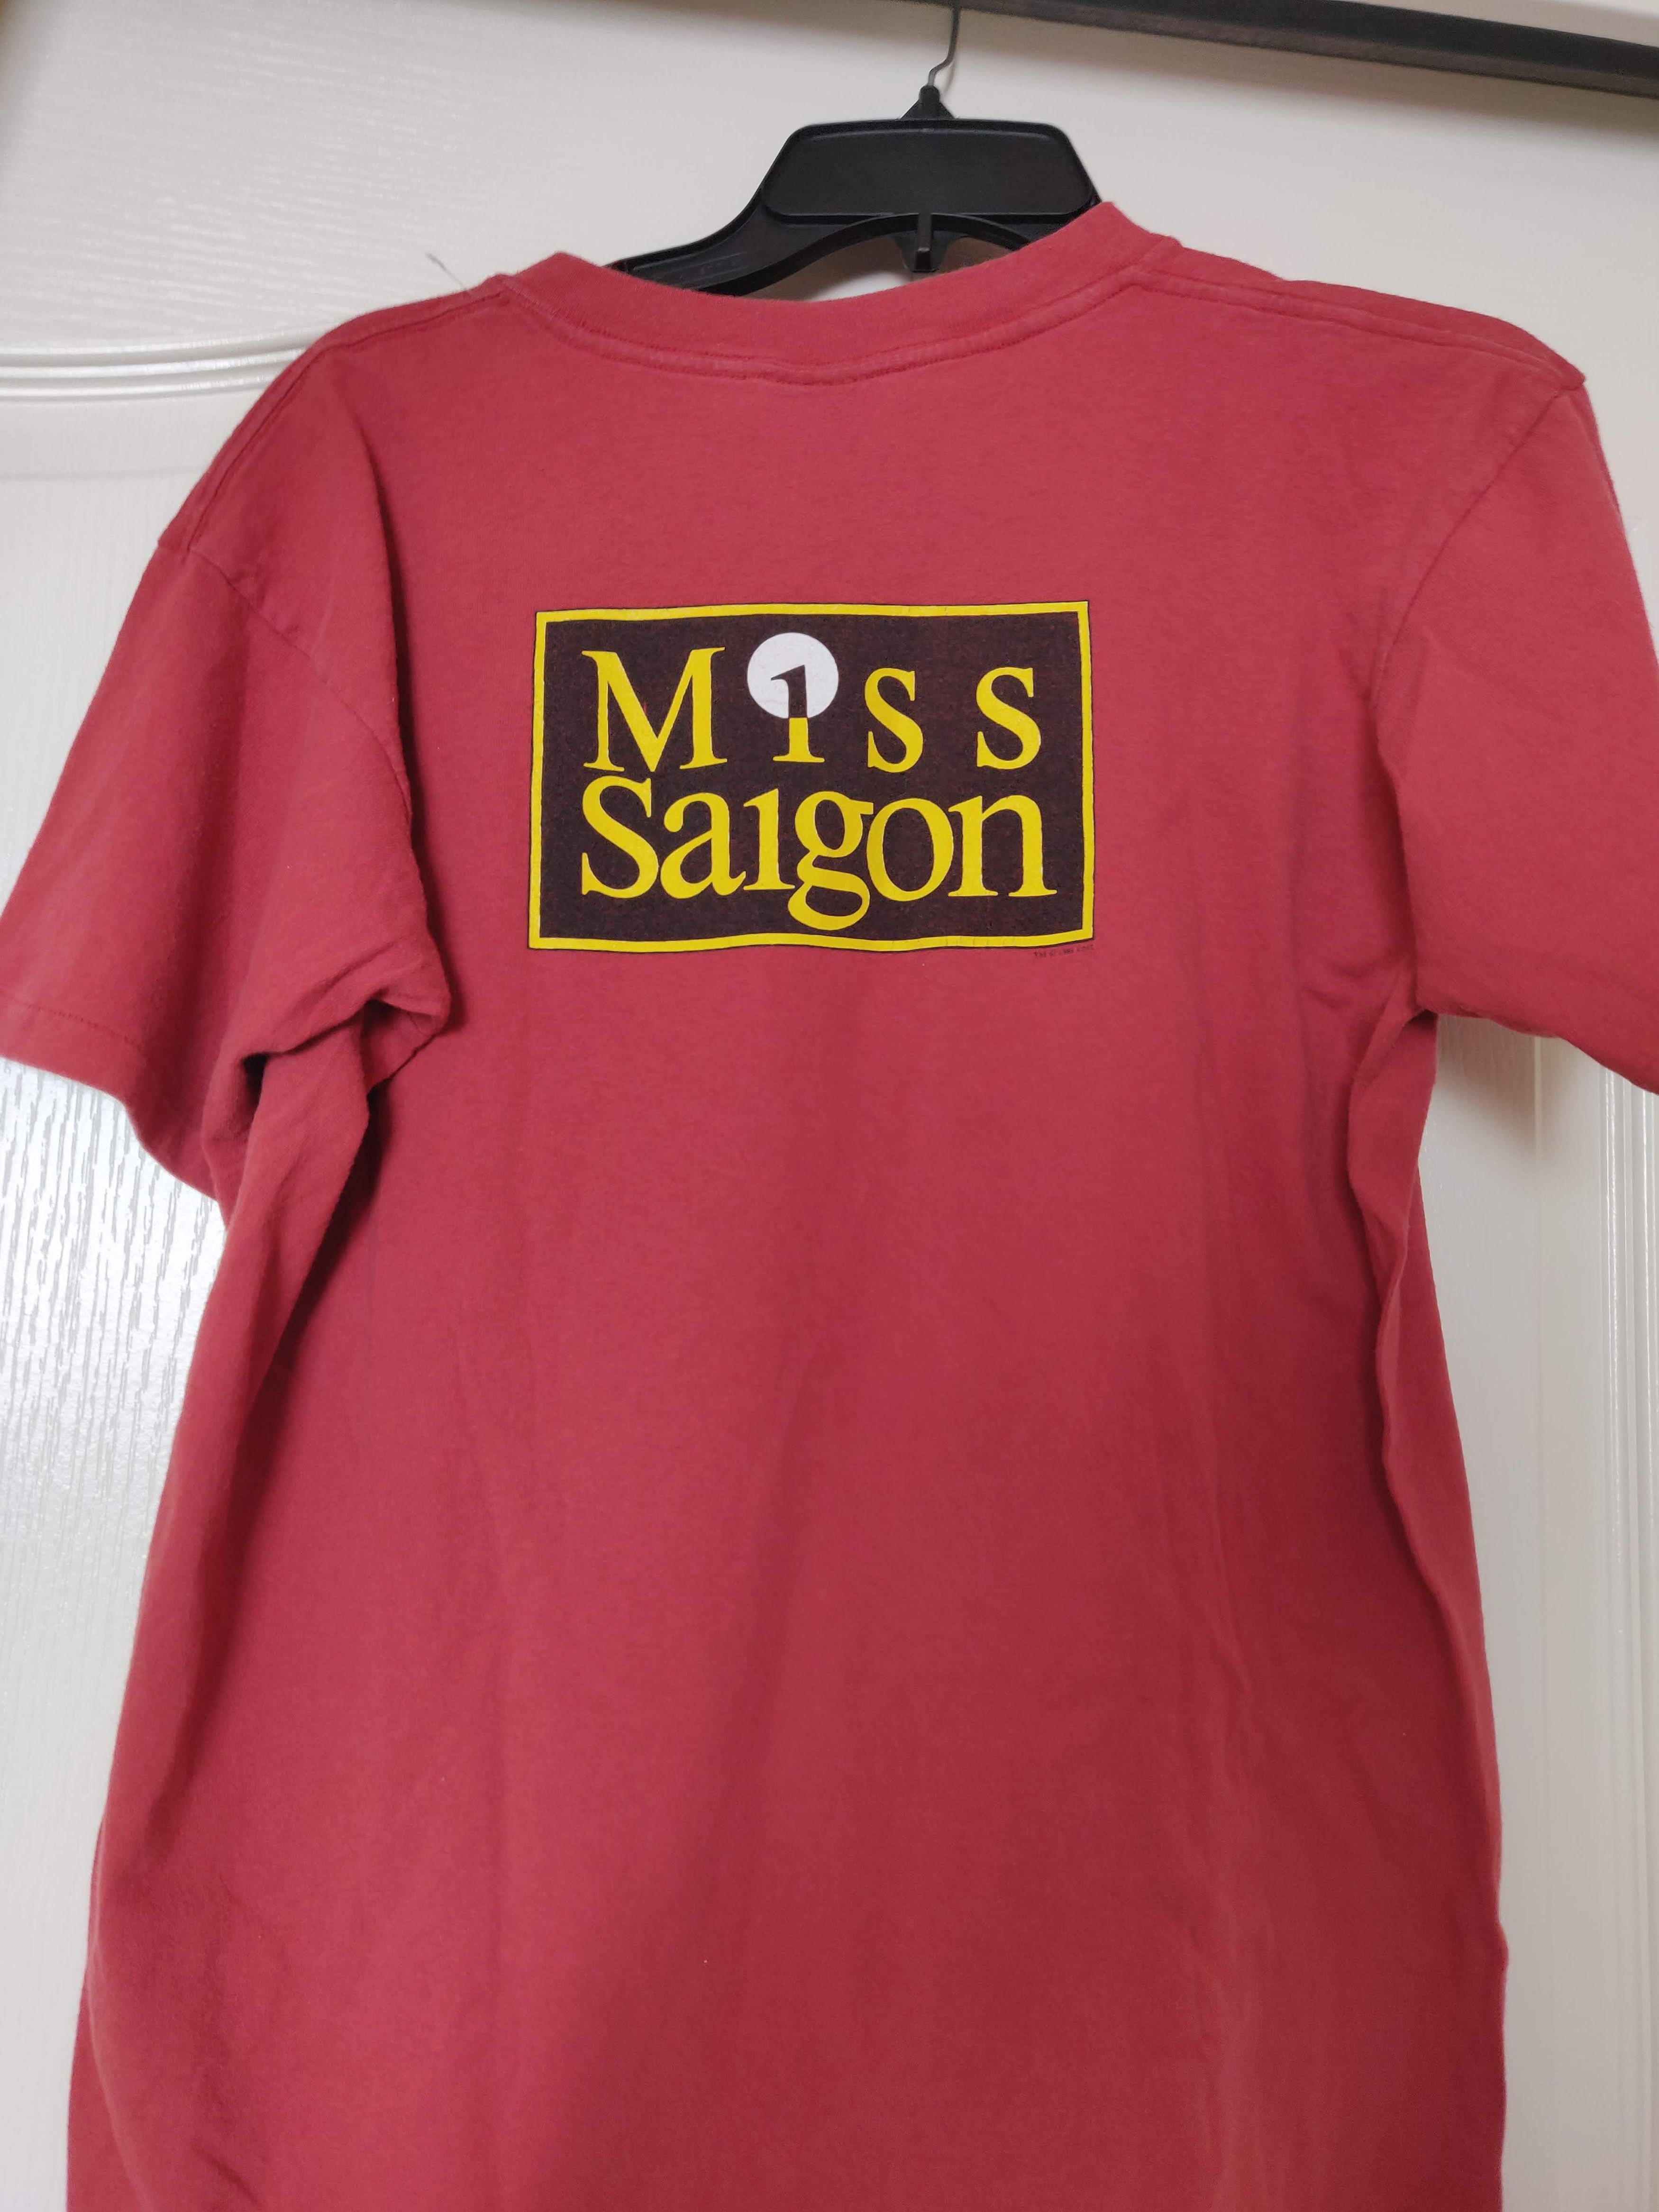 Vintage VTG 88 Miss Saigon Tennessee River Gold T Shirt Men’s Size L Size US L / EU 52-54 / 3 - 5 Thumbnail